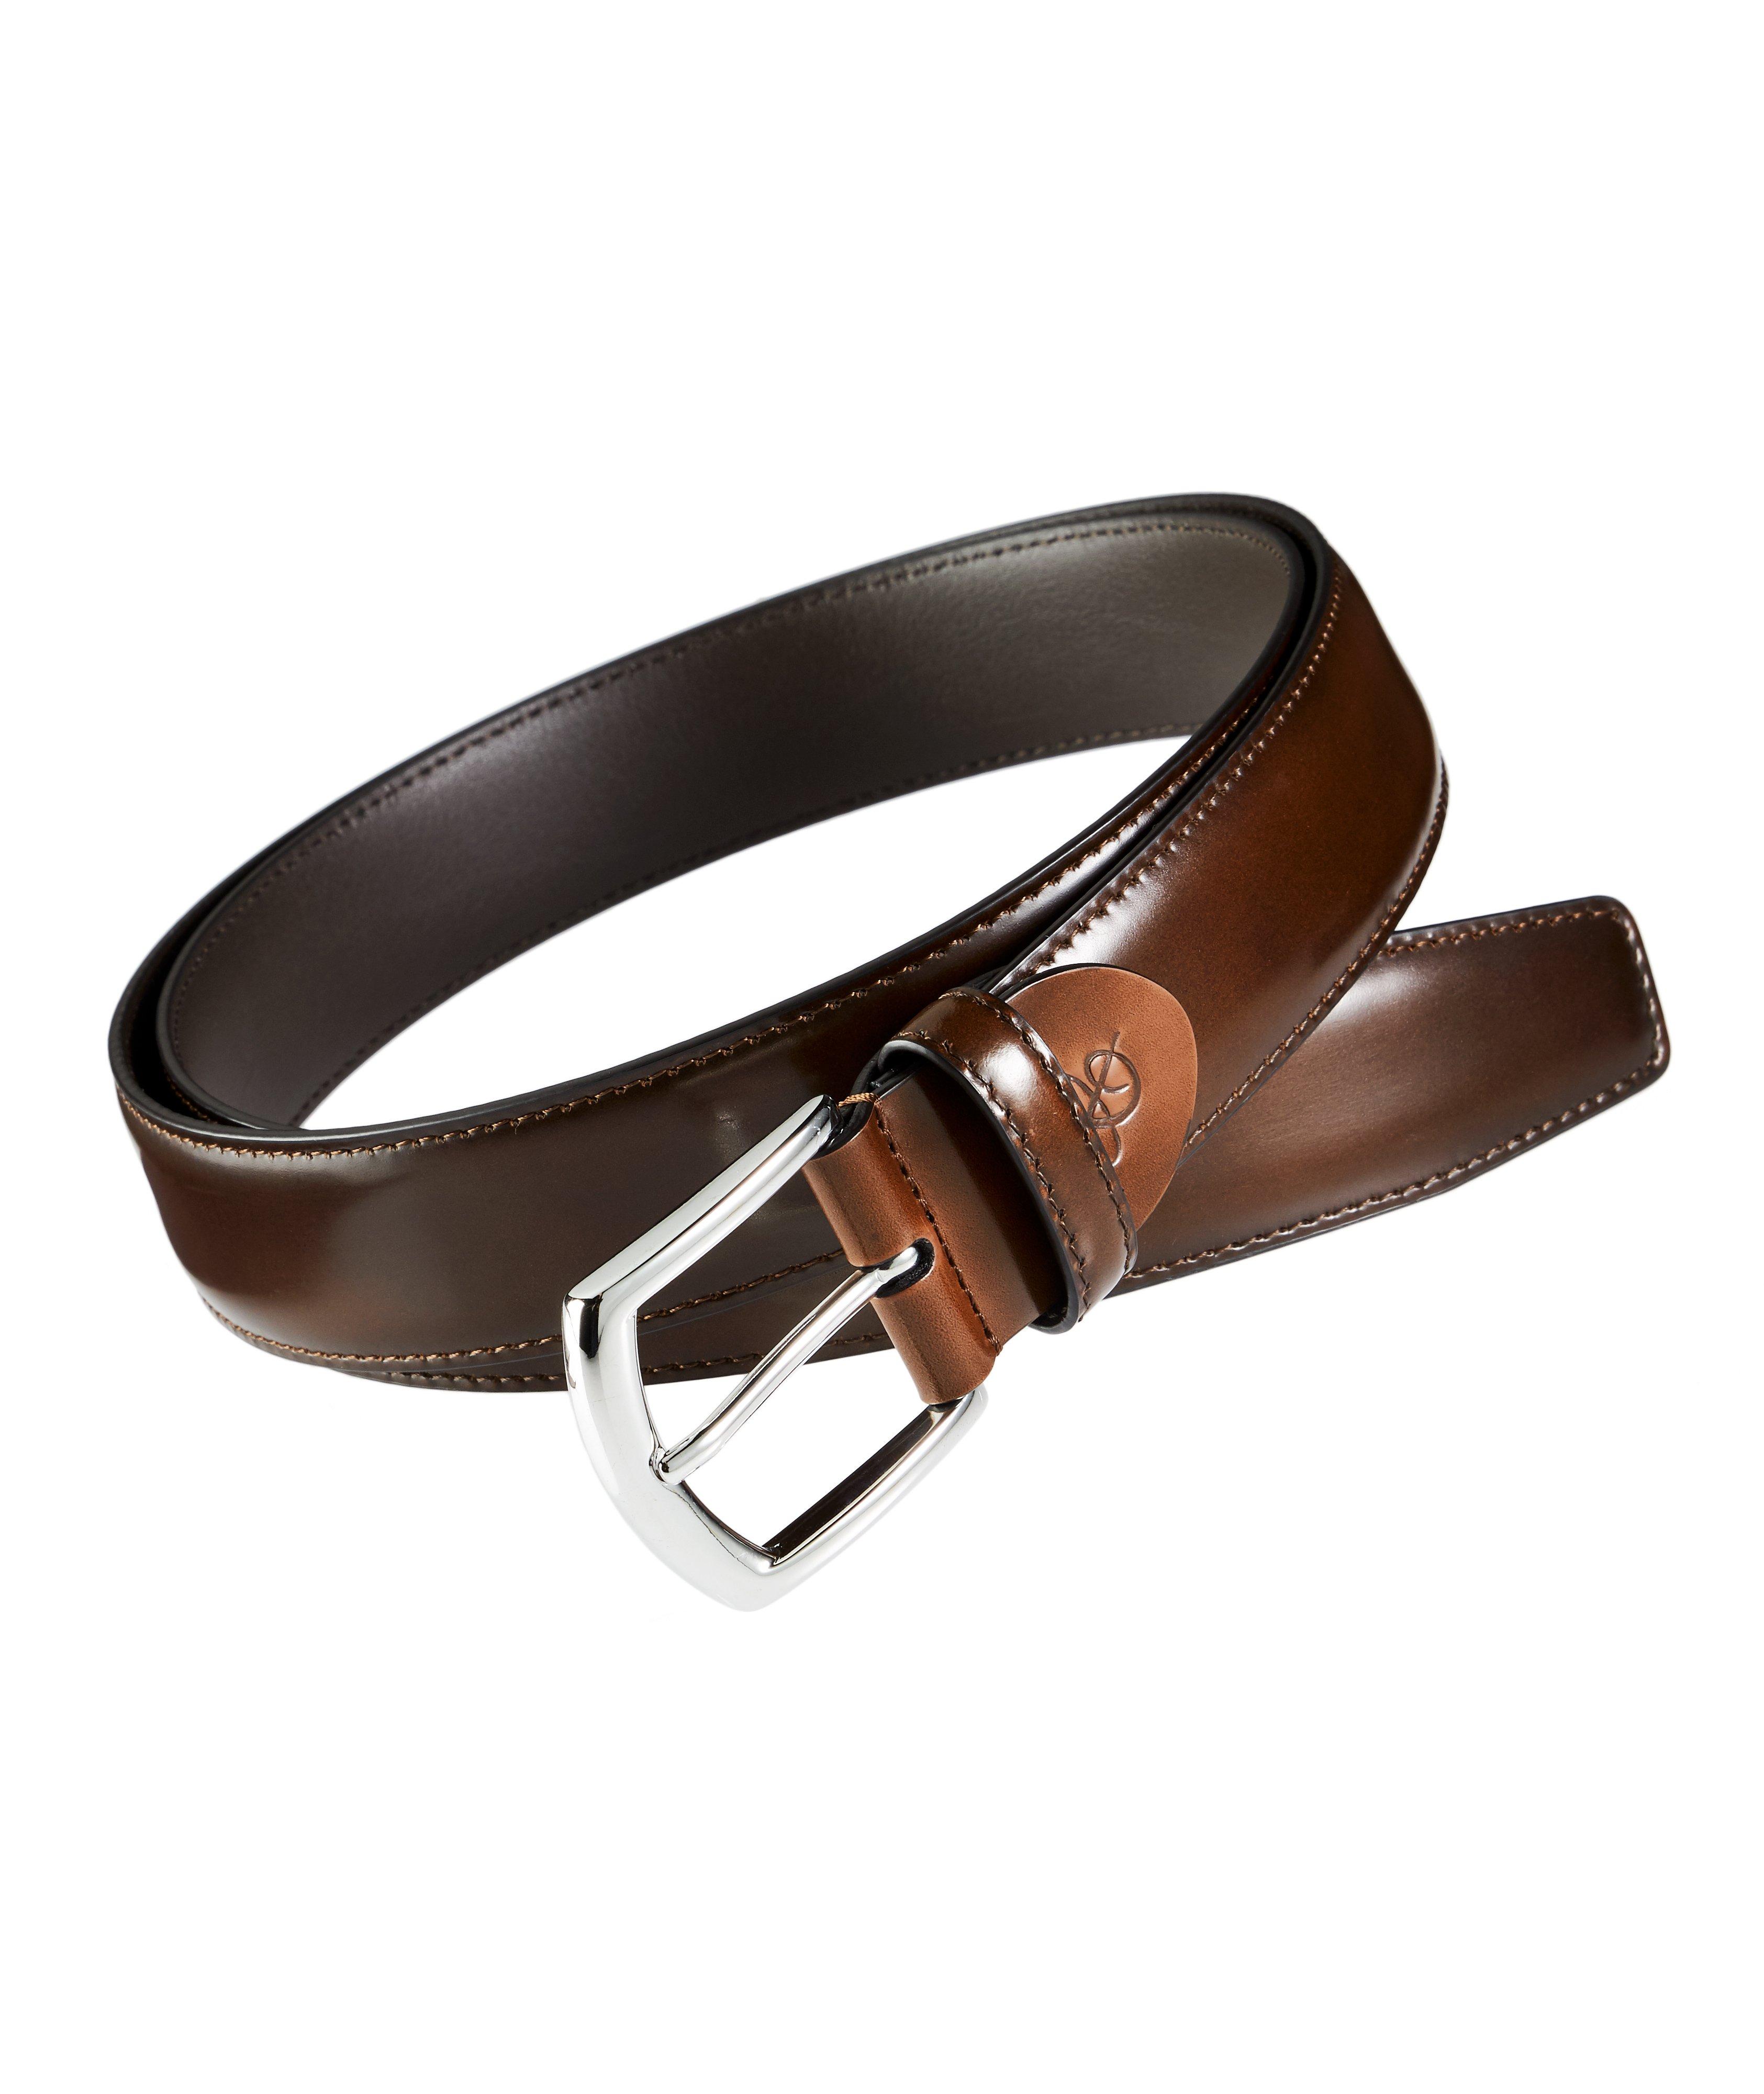 Spazzolato Leather Belt image 0